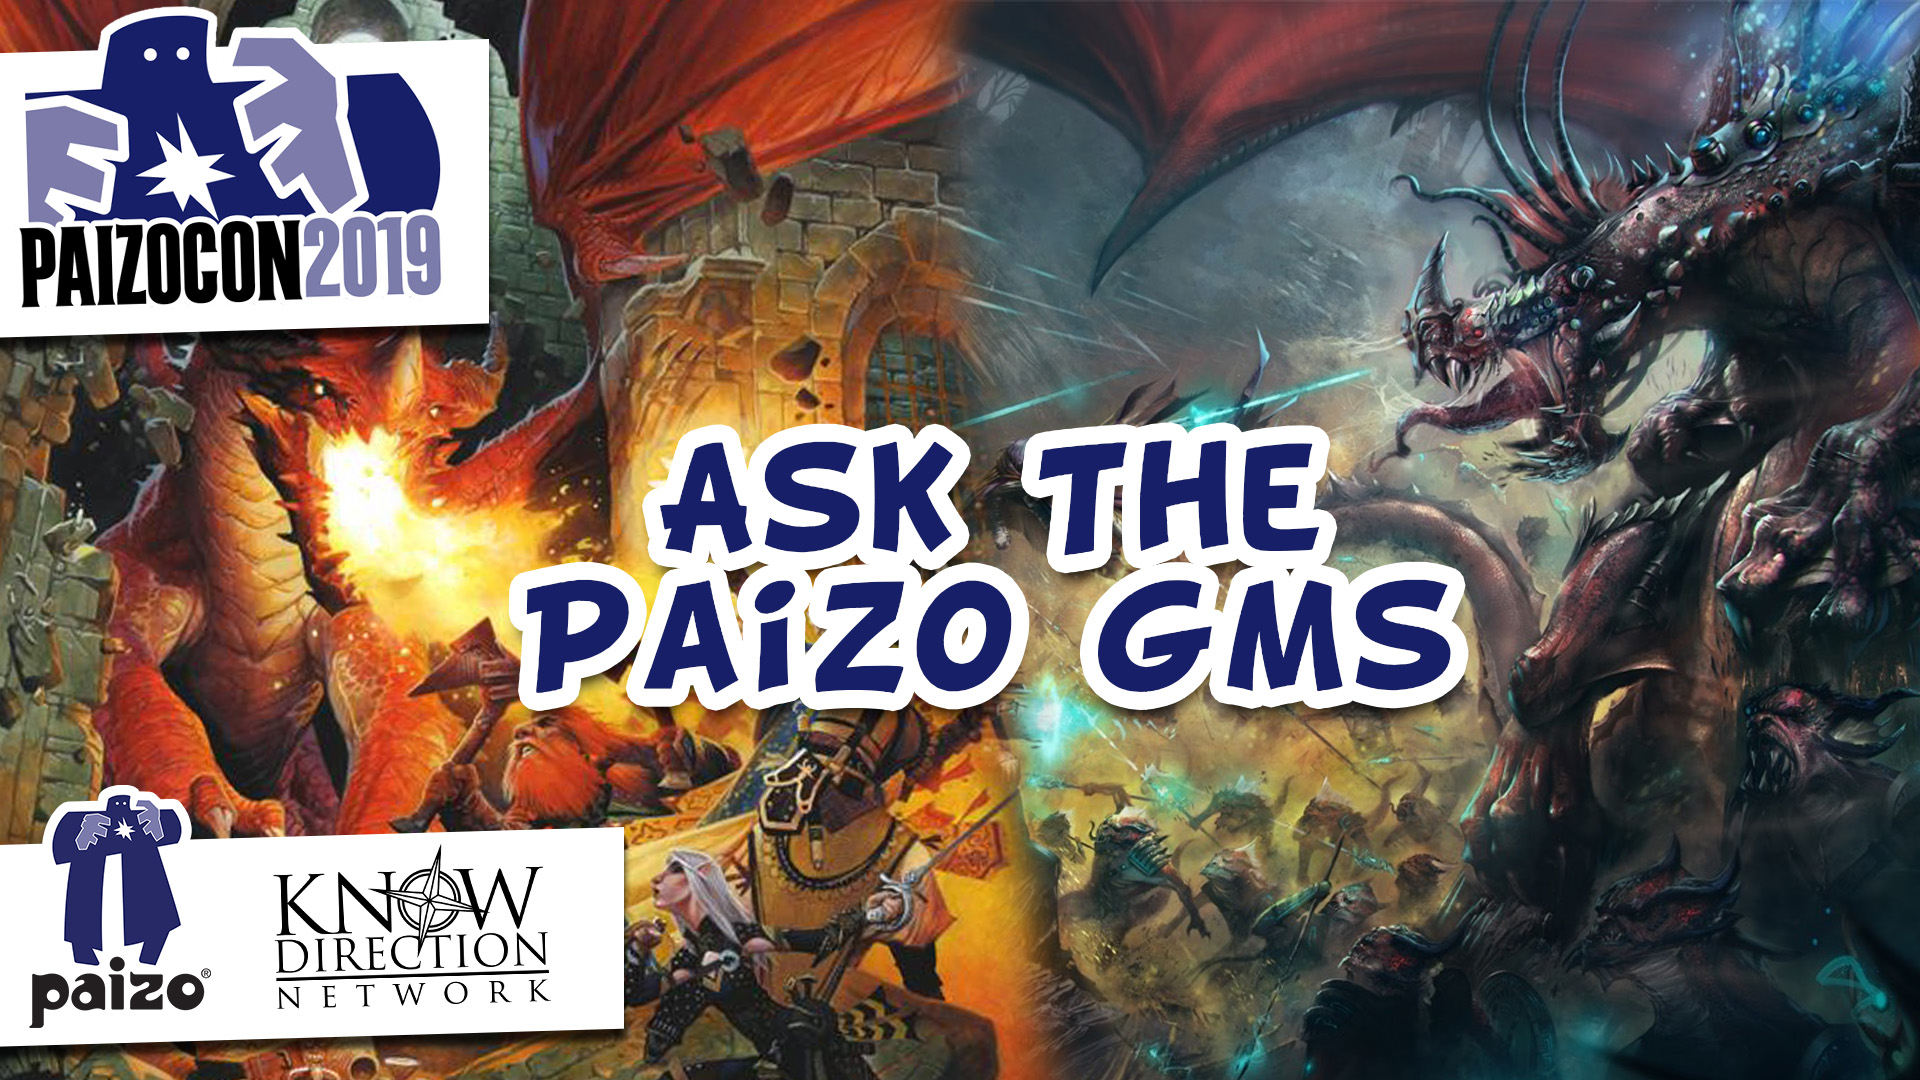 PaizoCon 2019 - Ask the Paizo GMs